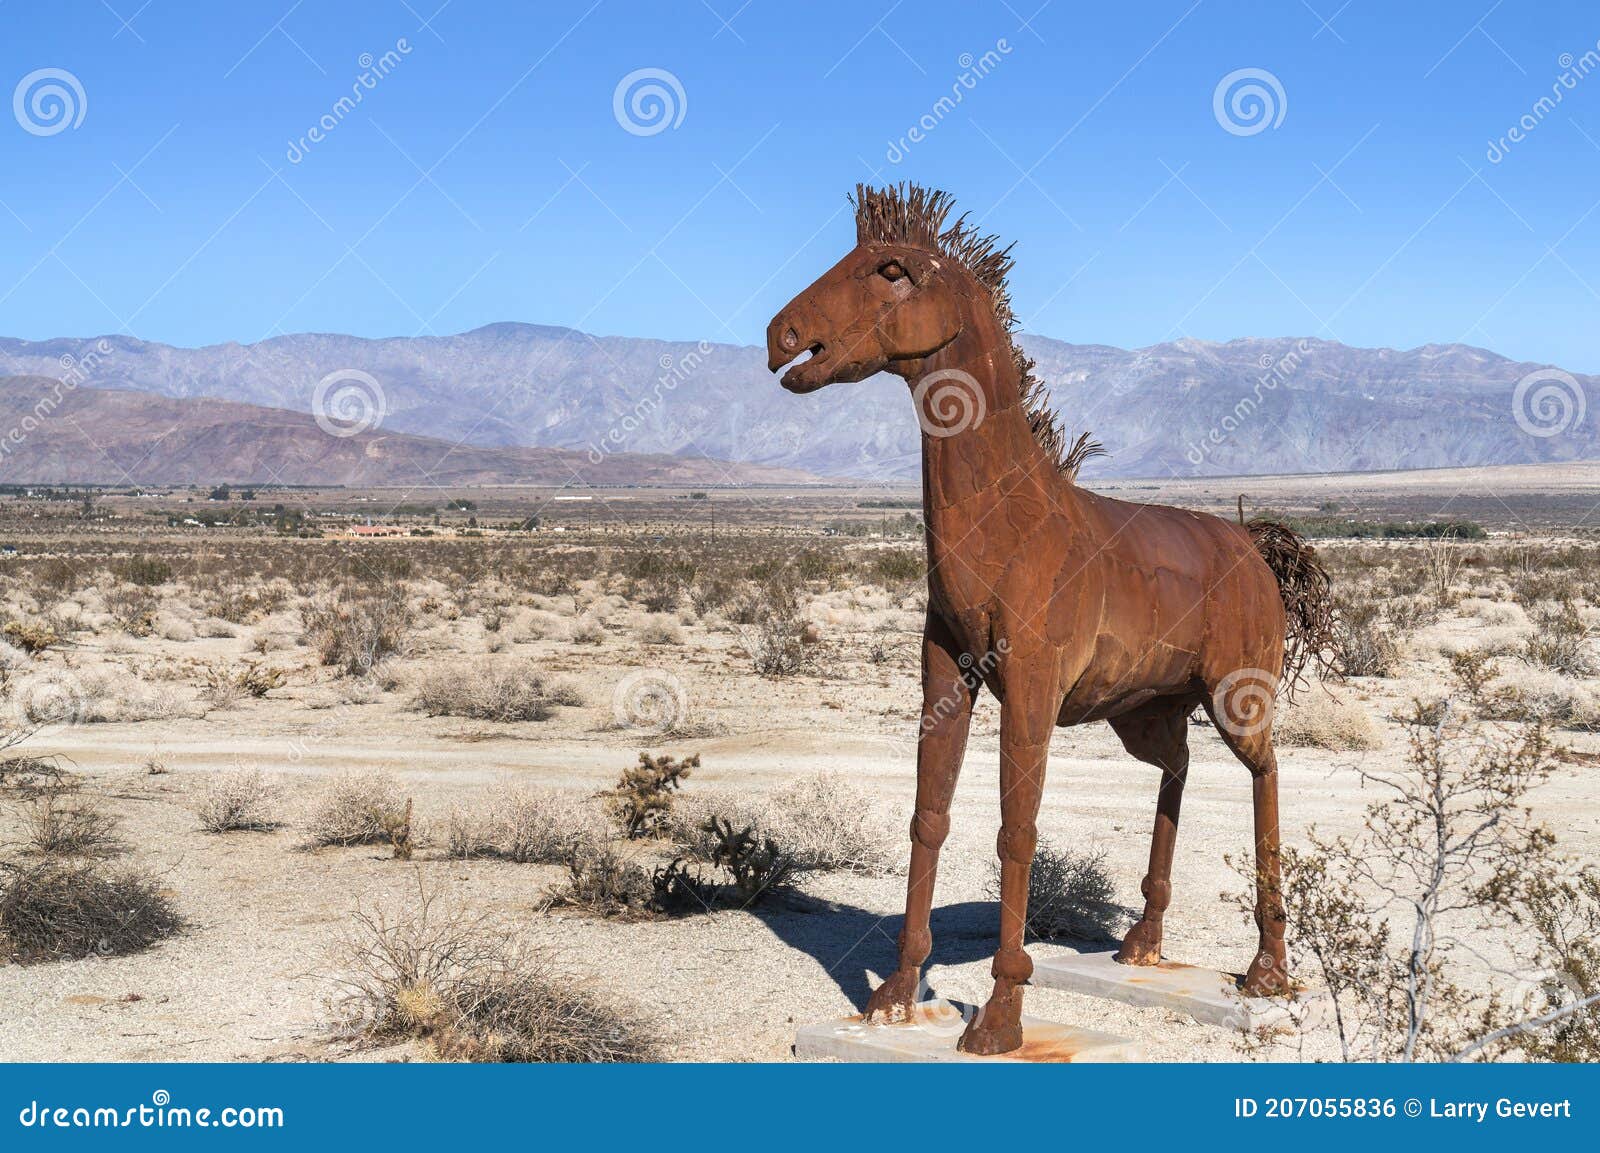 horse sculpture in galleta meadows